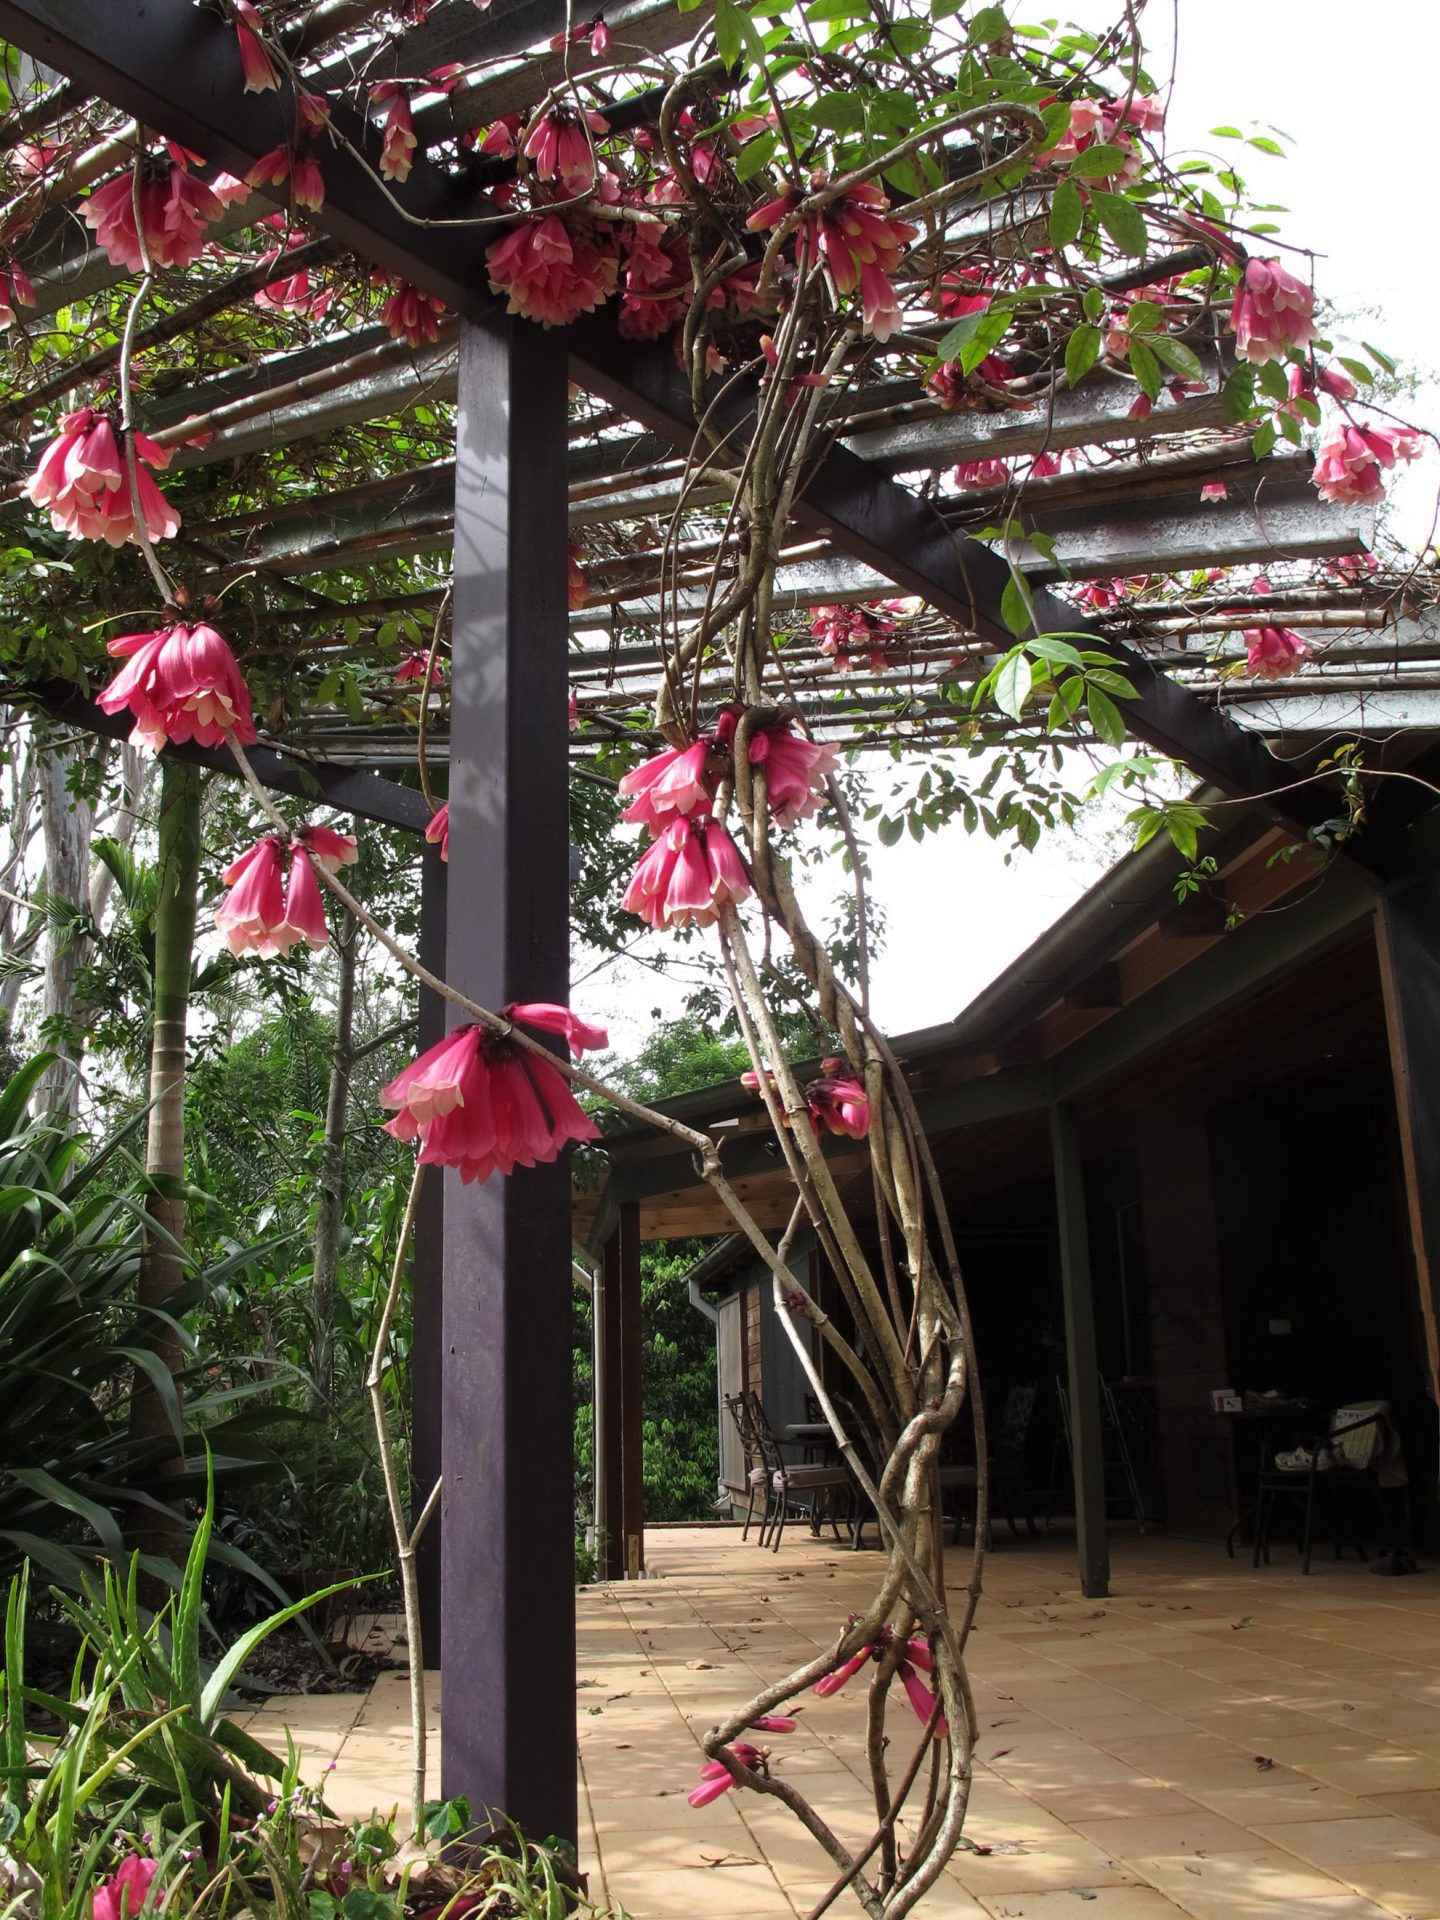 soft vine growing on pagoda